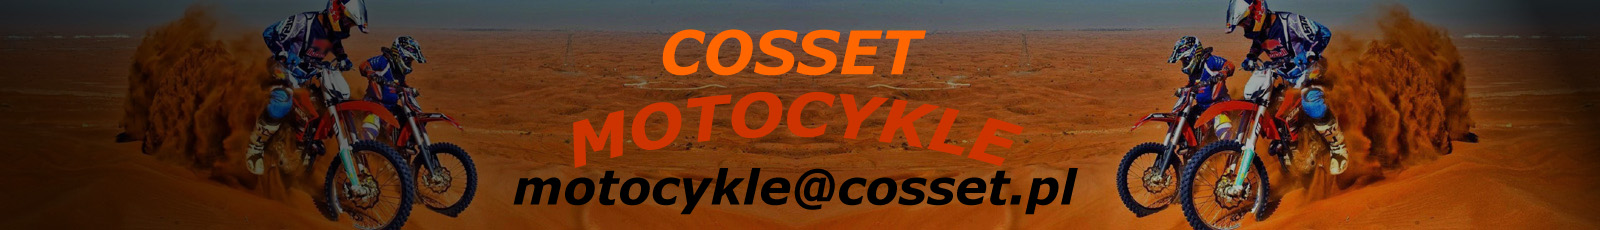 COSSET MOTOCYKLE